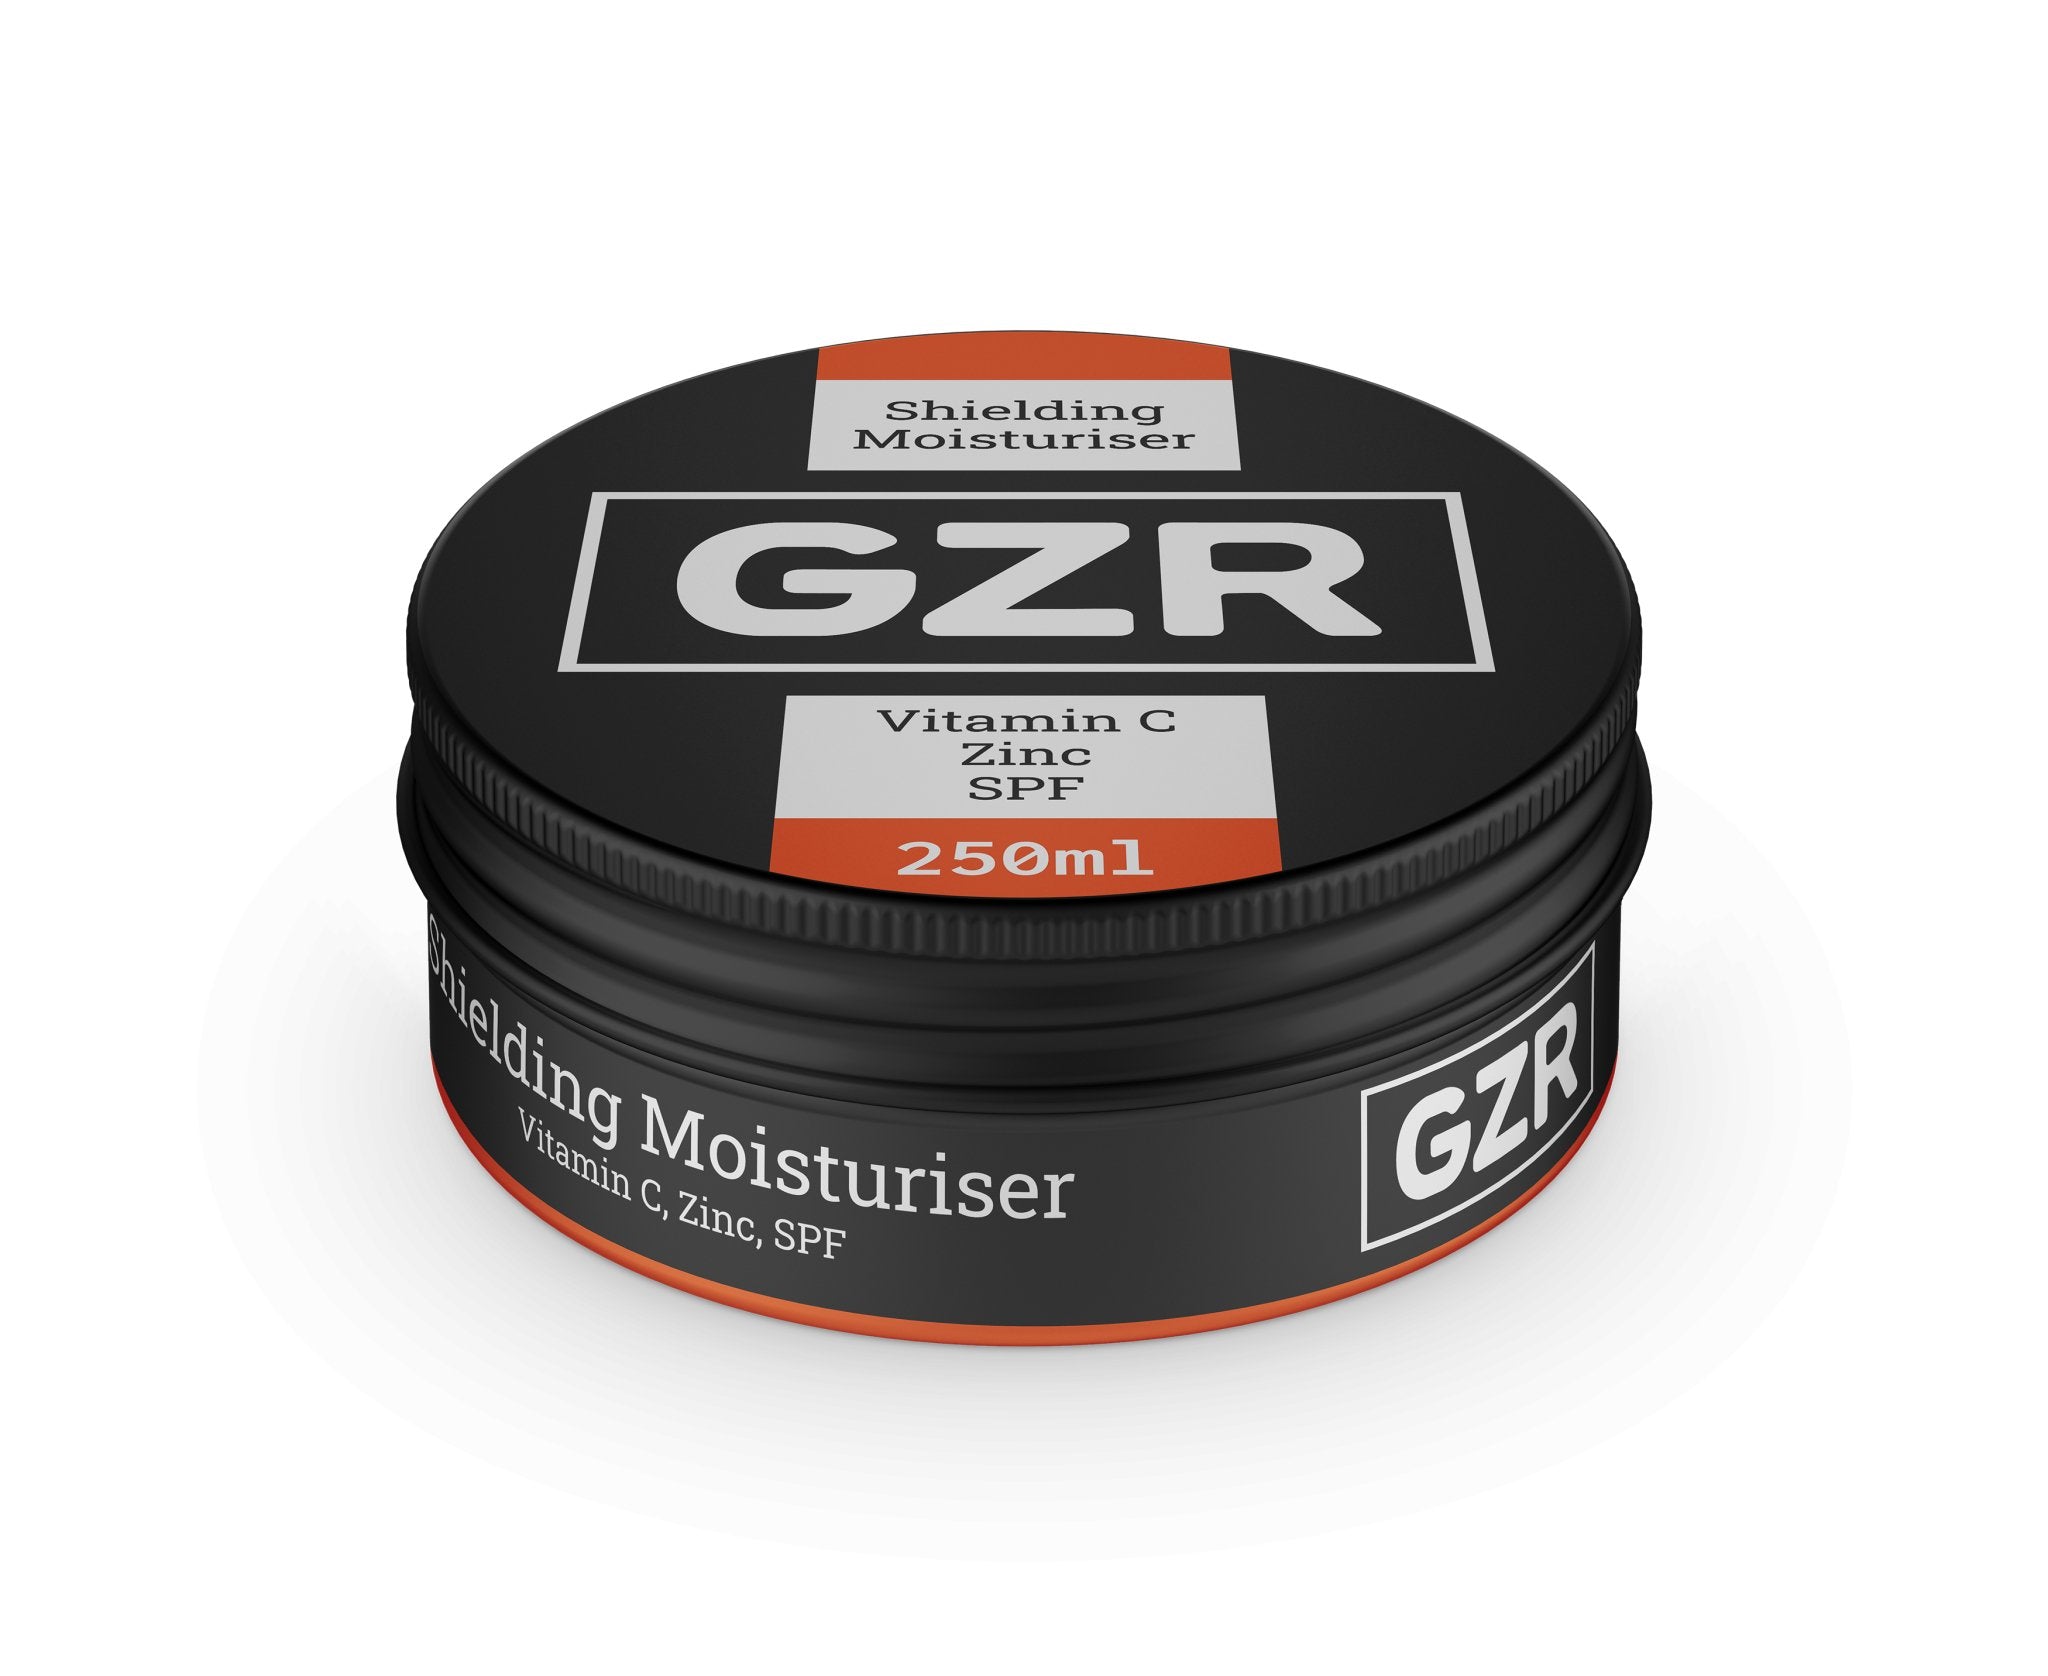 Shielding Moisturiser, 250ml - GZR